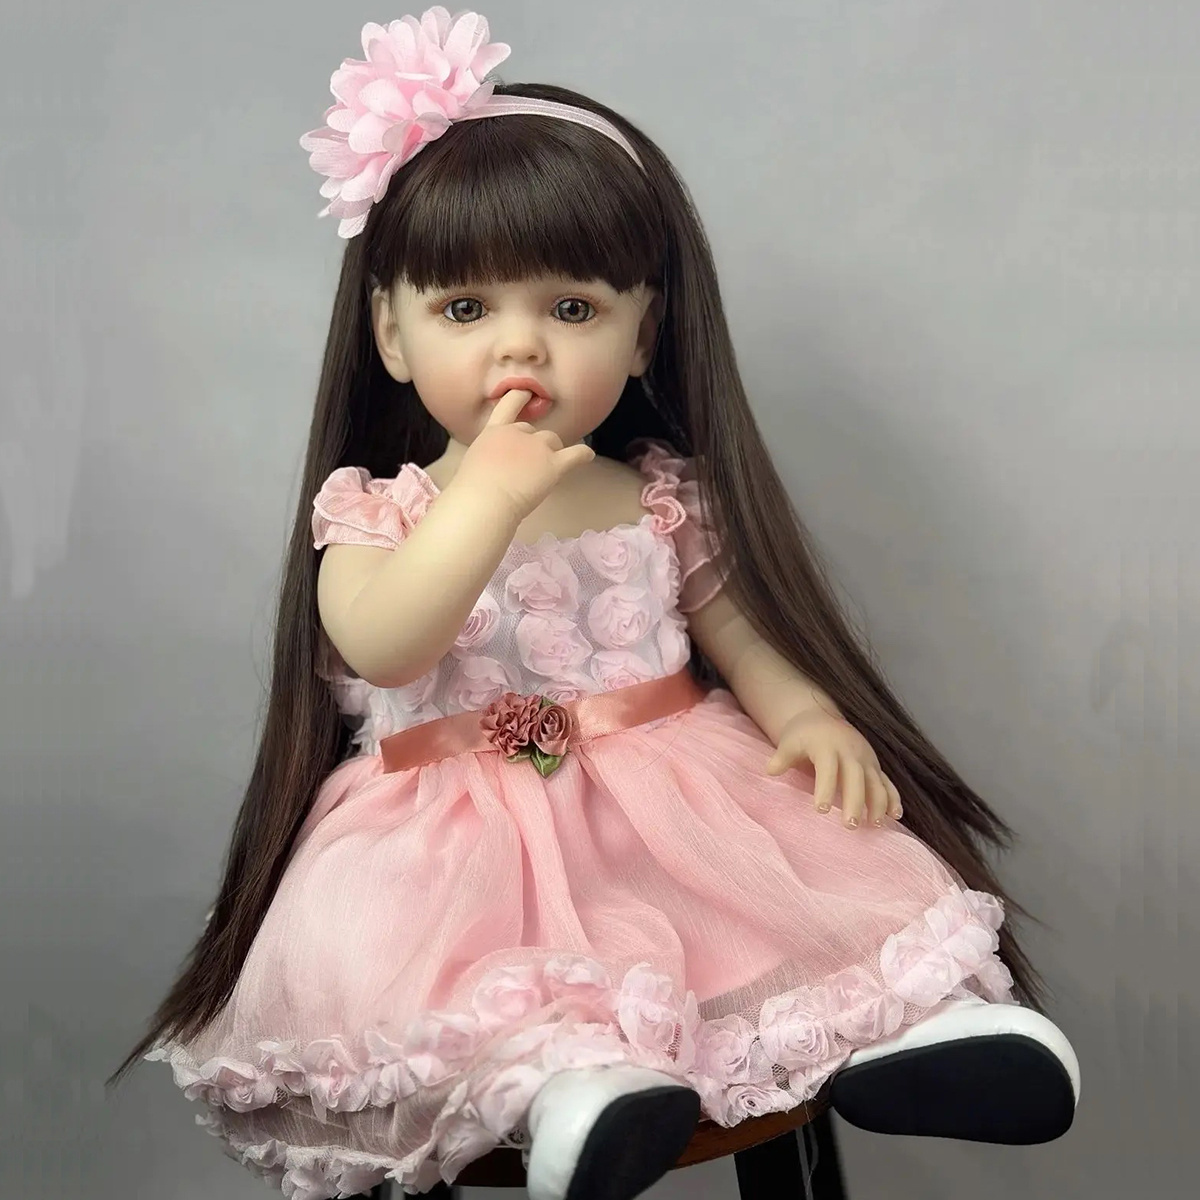 

55cm Full Body Soft Silicone Doll, 22in Princess Newborn Lifelike Art Toy, Christmas Gift